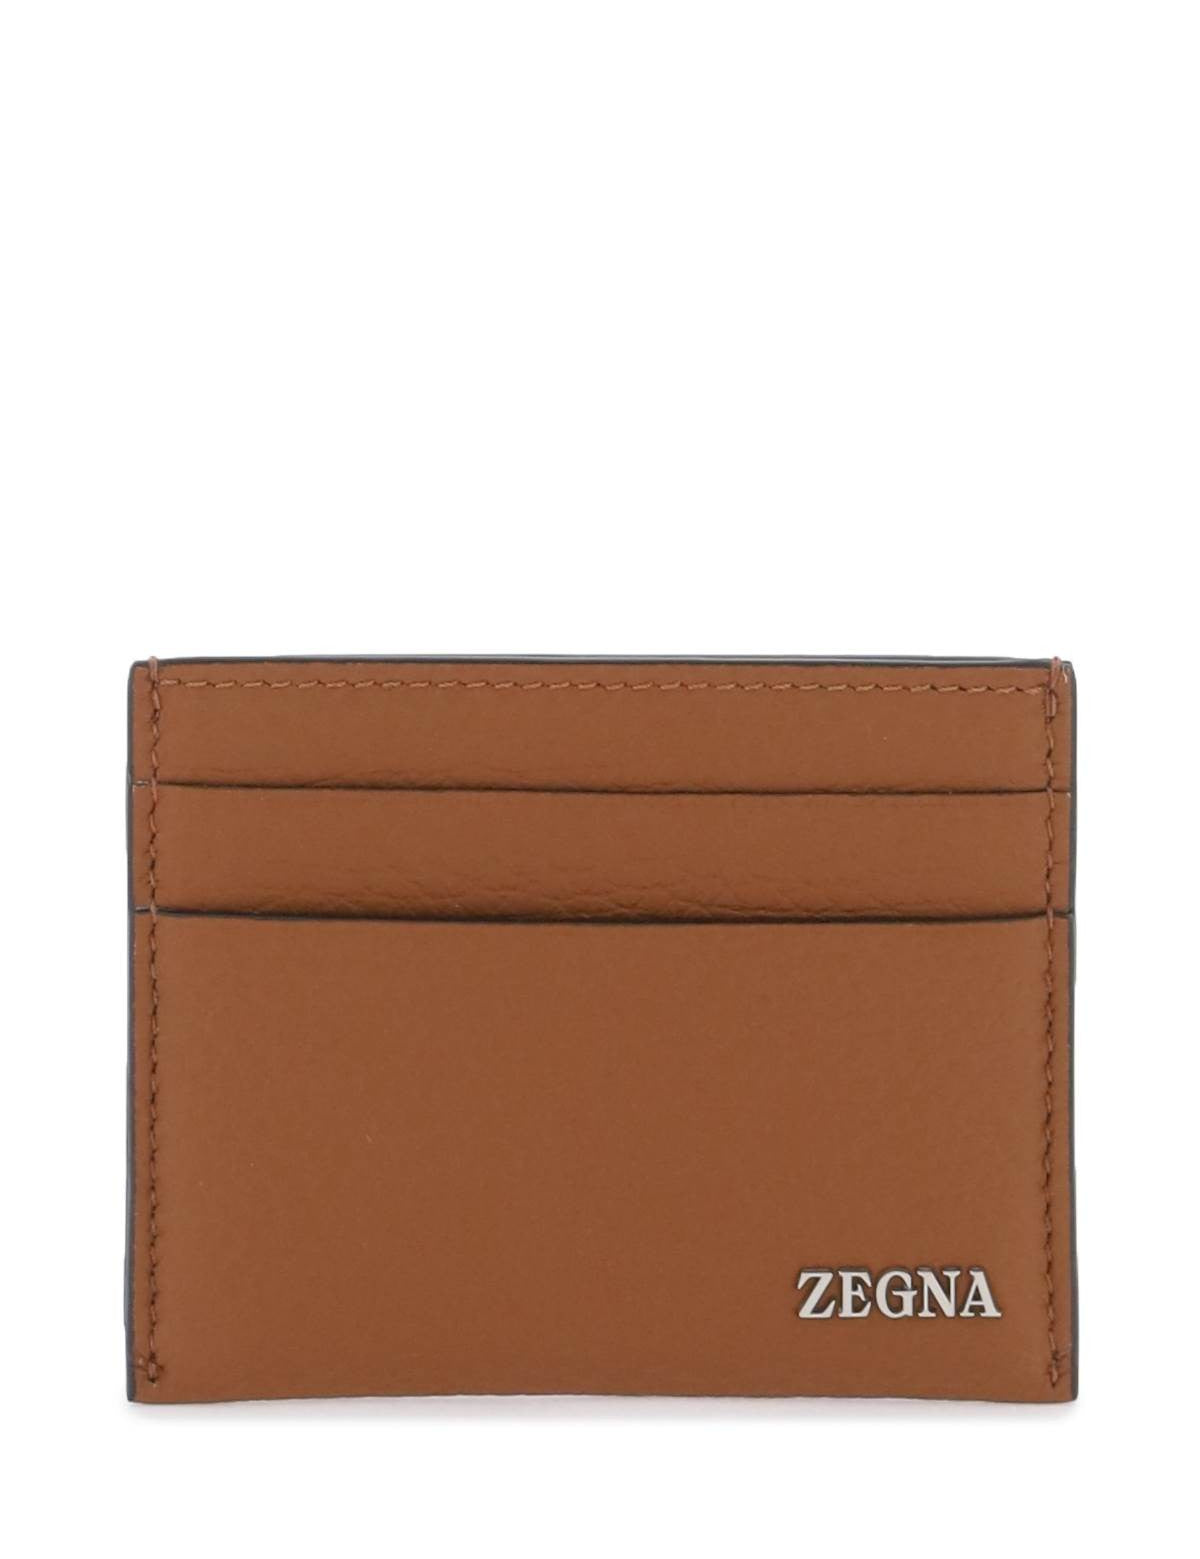 zegna-leather-cardholder_a2d91dc3-34a6-48d9-be52-a148c1beb7e6.jpg